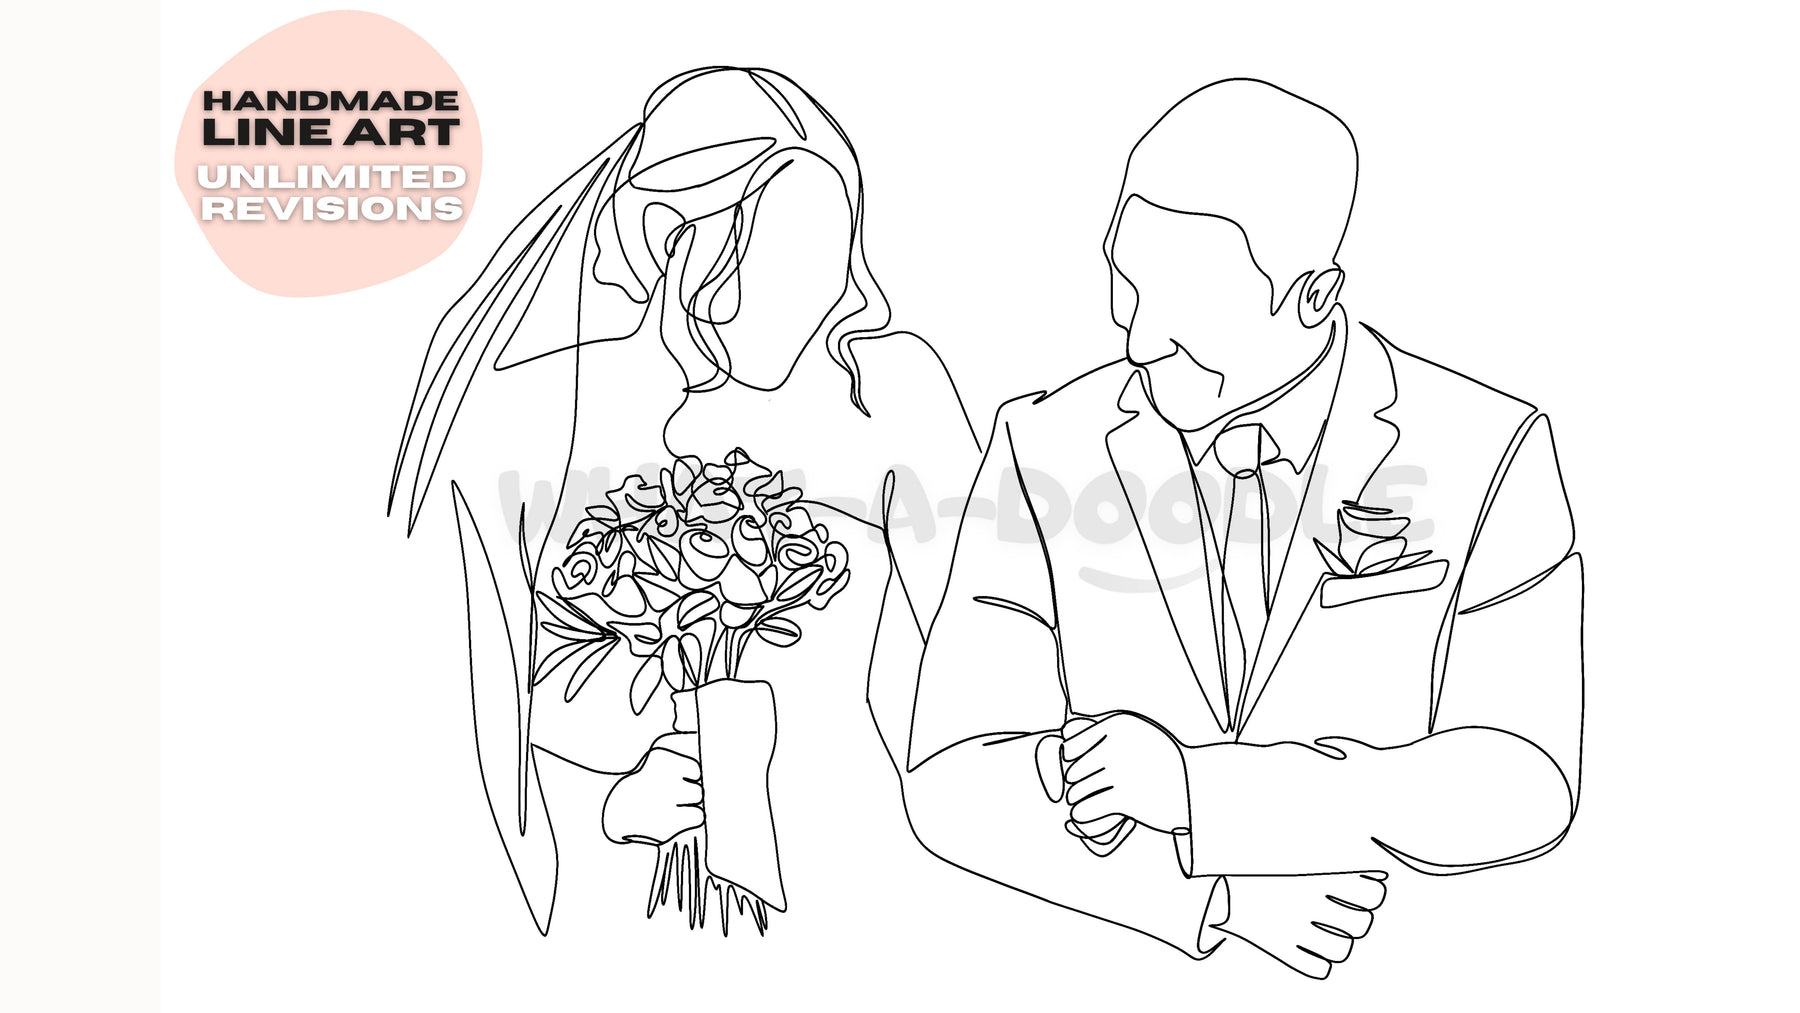 Digital line art of a newlywed couple.